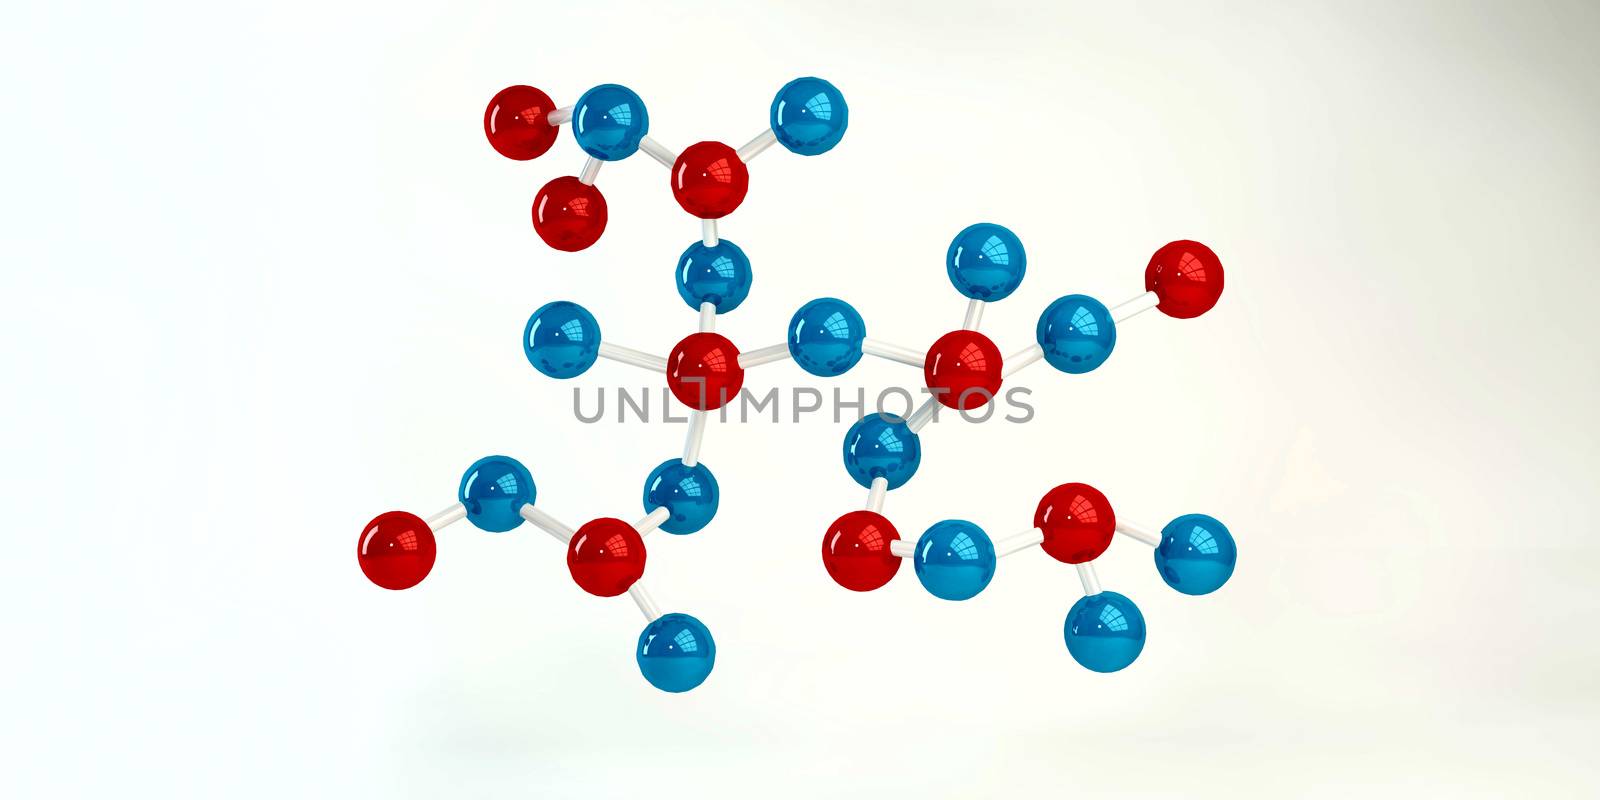 Molecule Background by kentoh